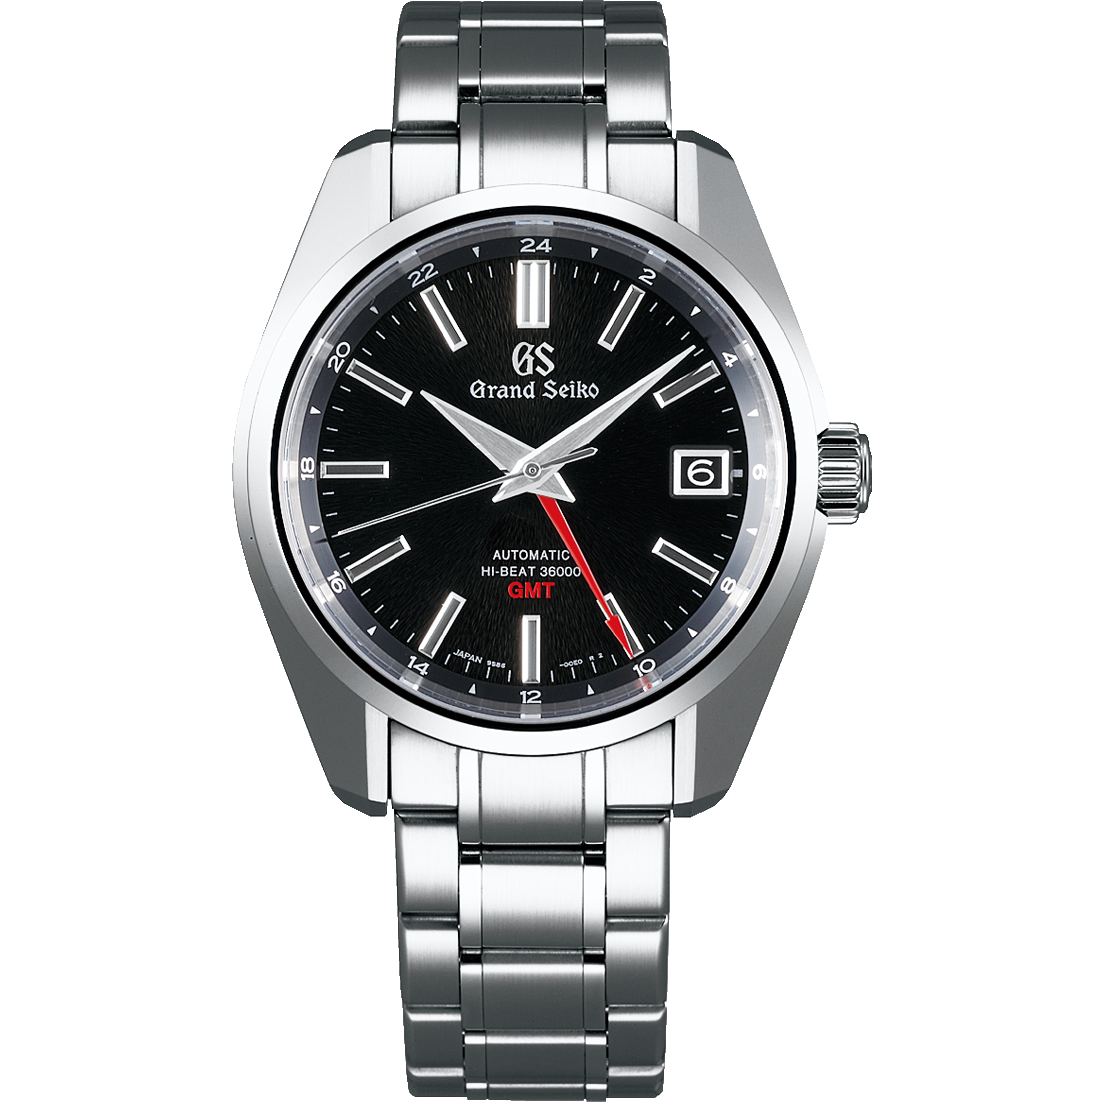 Grand Seiko Hi-Beat GMT Automatic Watch - SBGJ203G - FINAL SALE